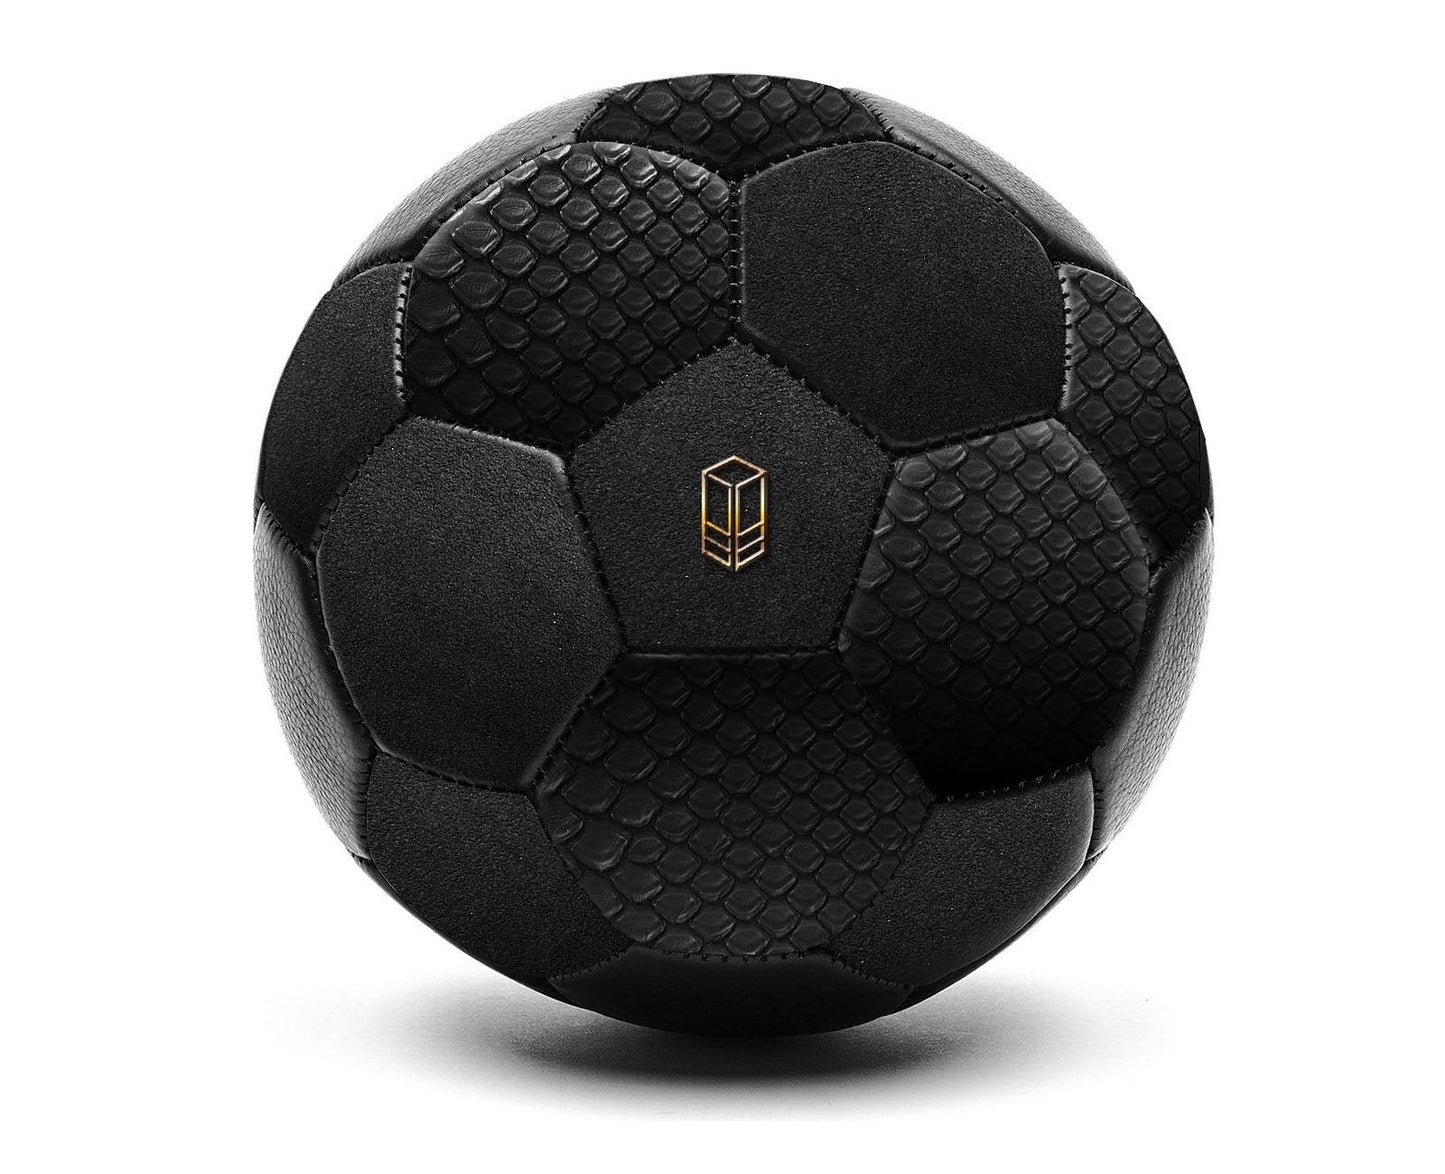 Python Soccer ball